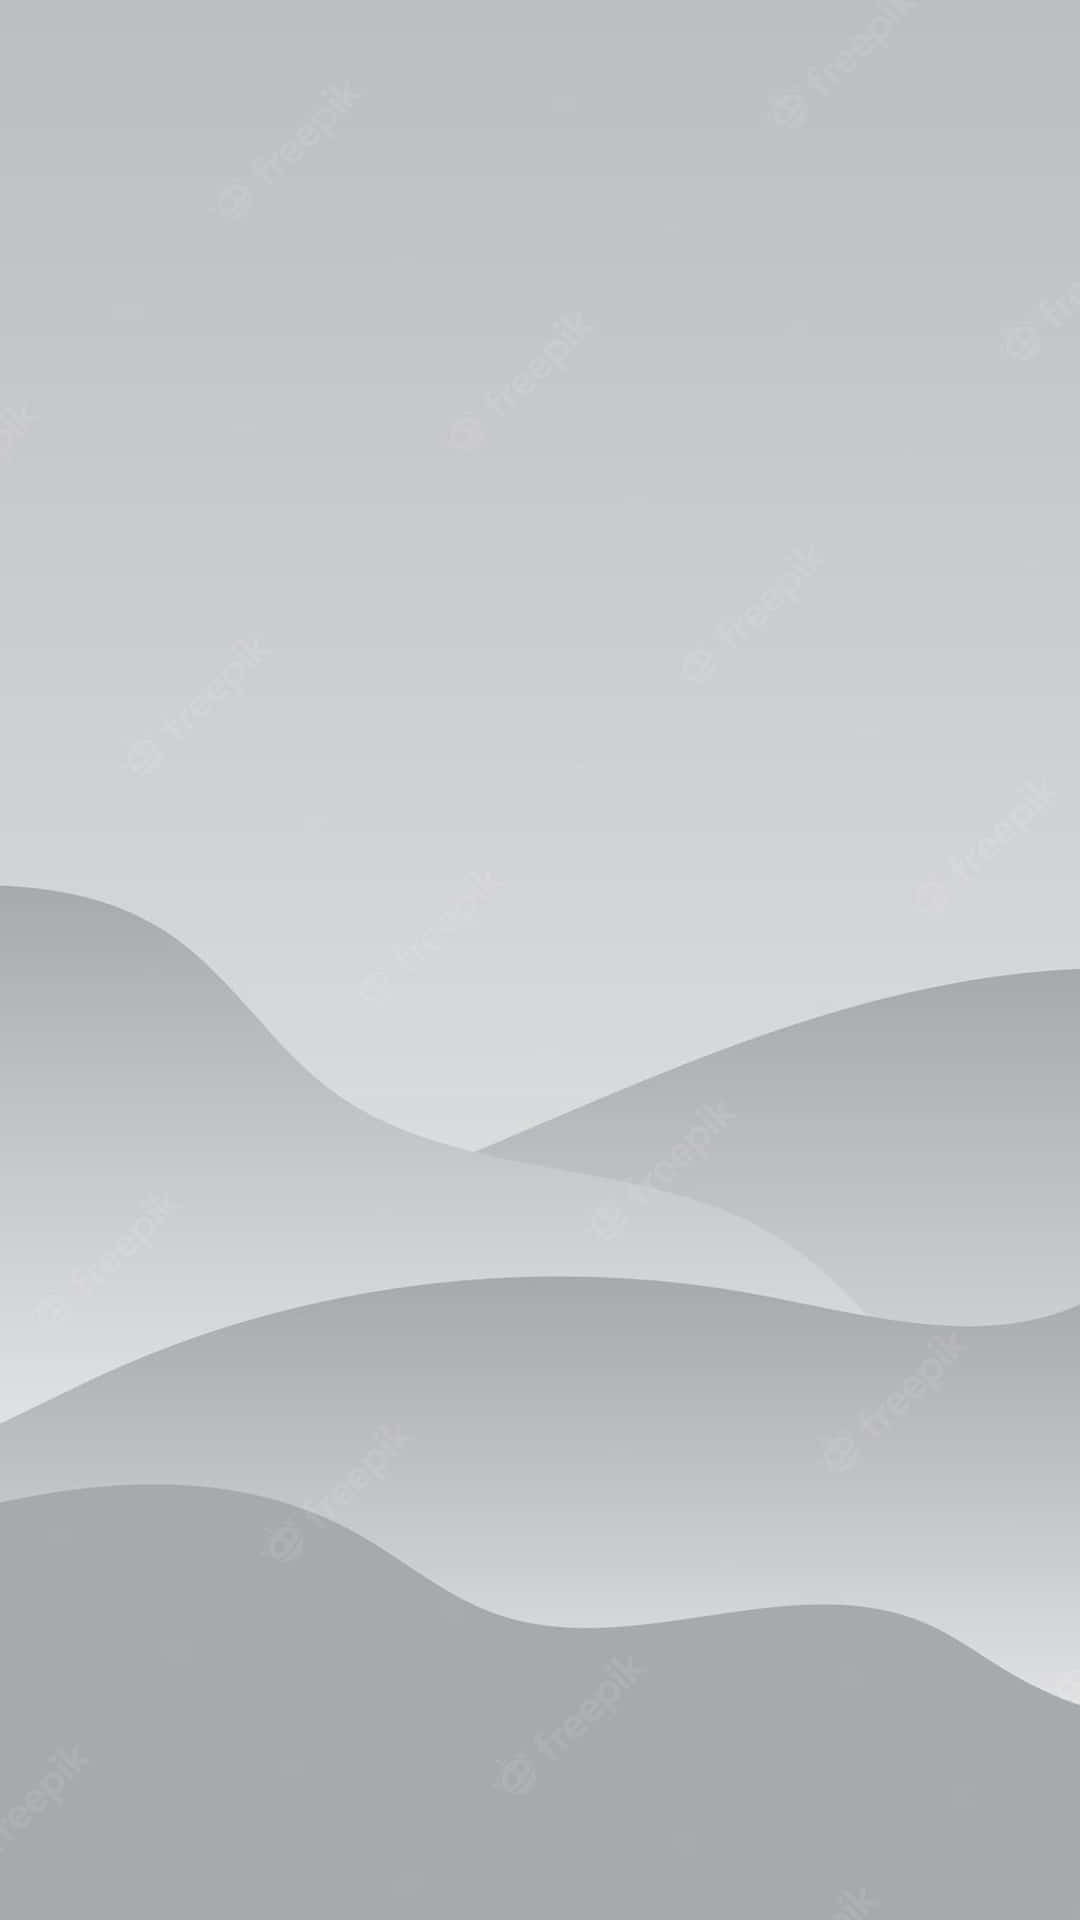 A Sleek And Stylish Light Gray Iphone Wallpaper